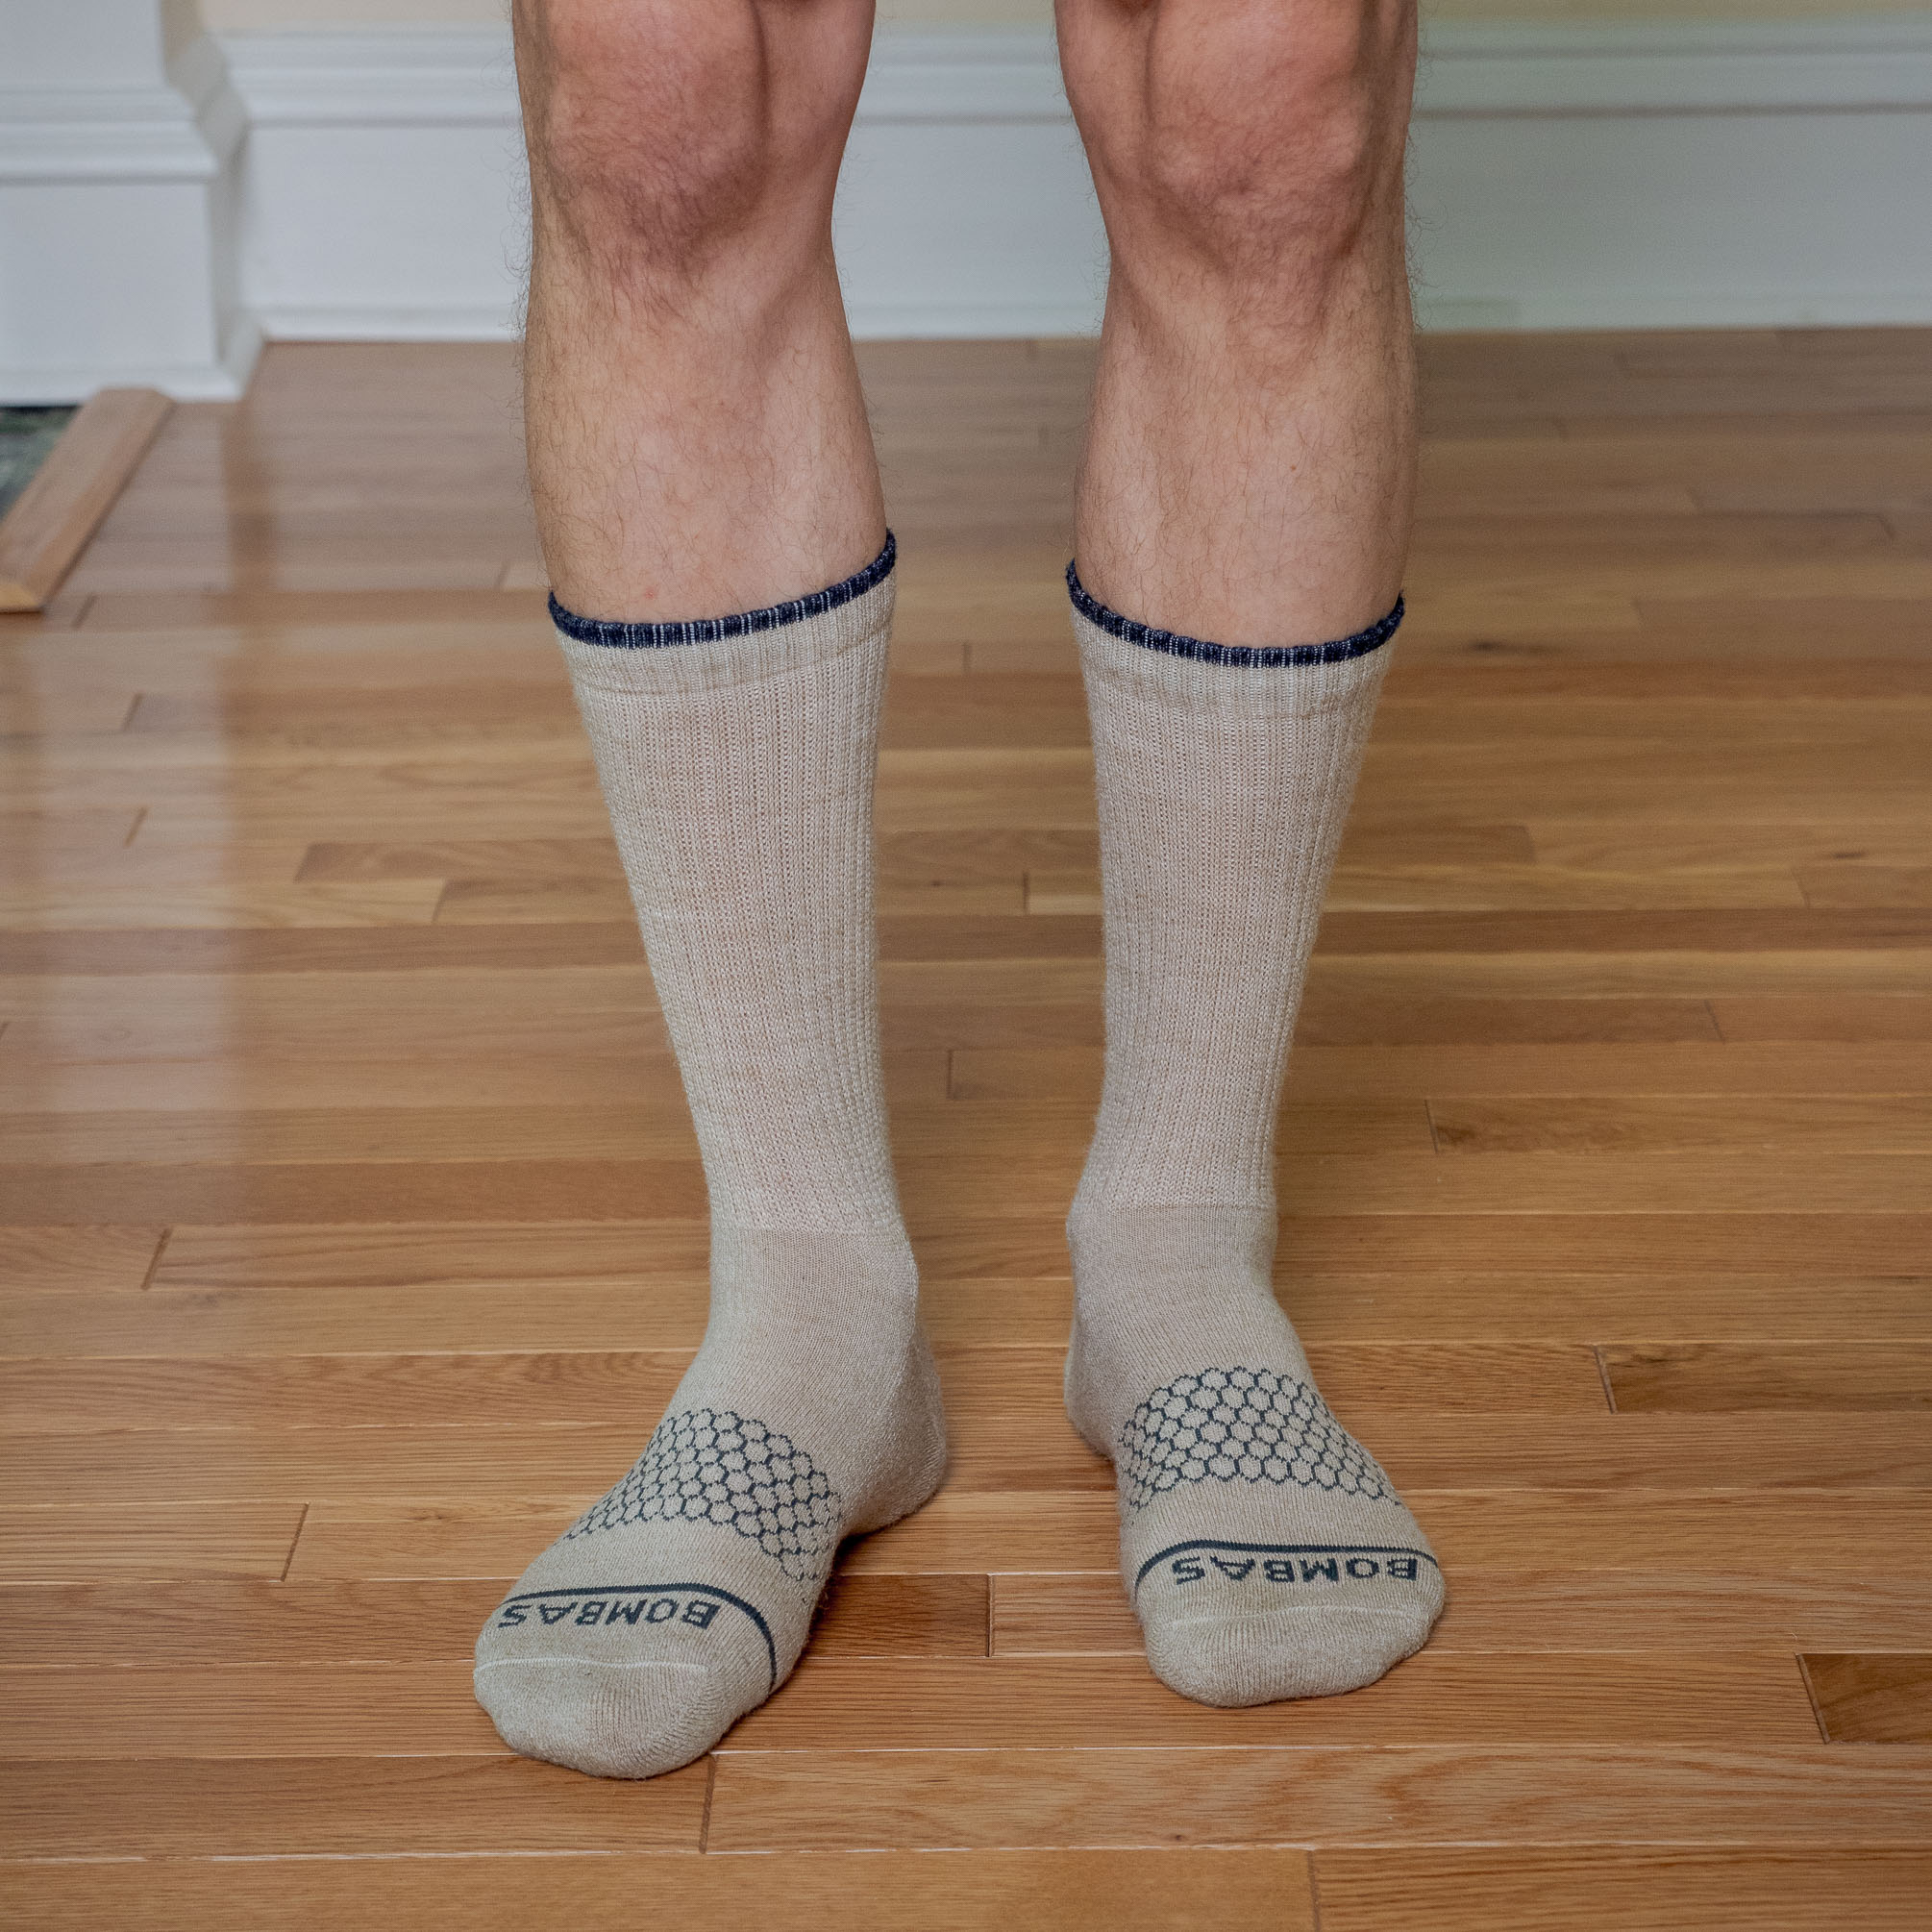 Right Angle Five-Toe Sneaker Socks, Unisex 5 Toe Socks